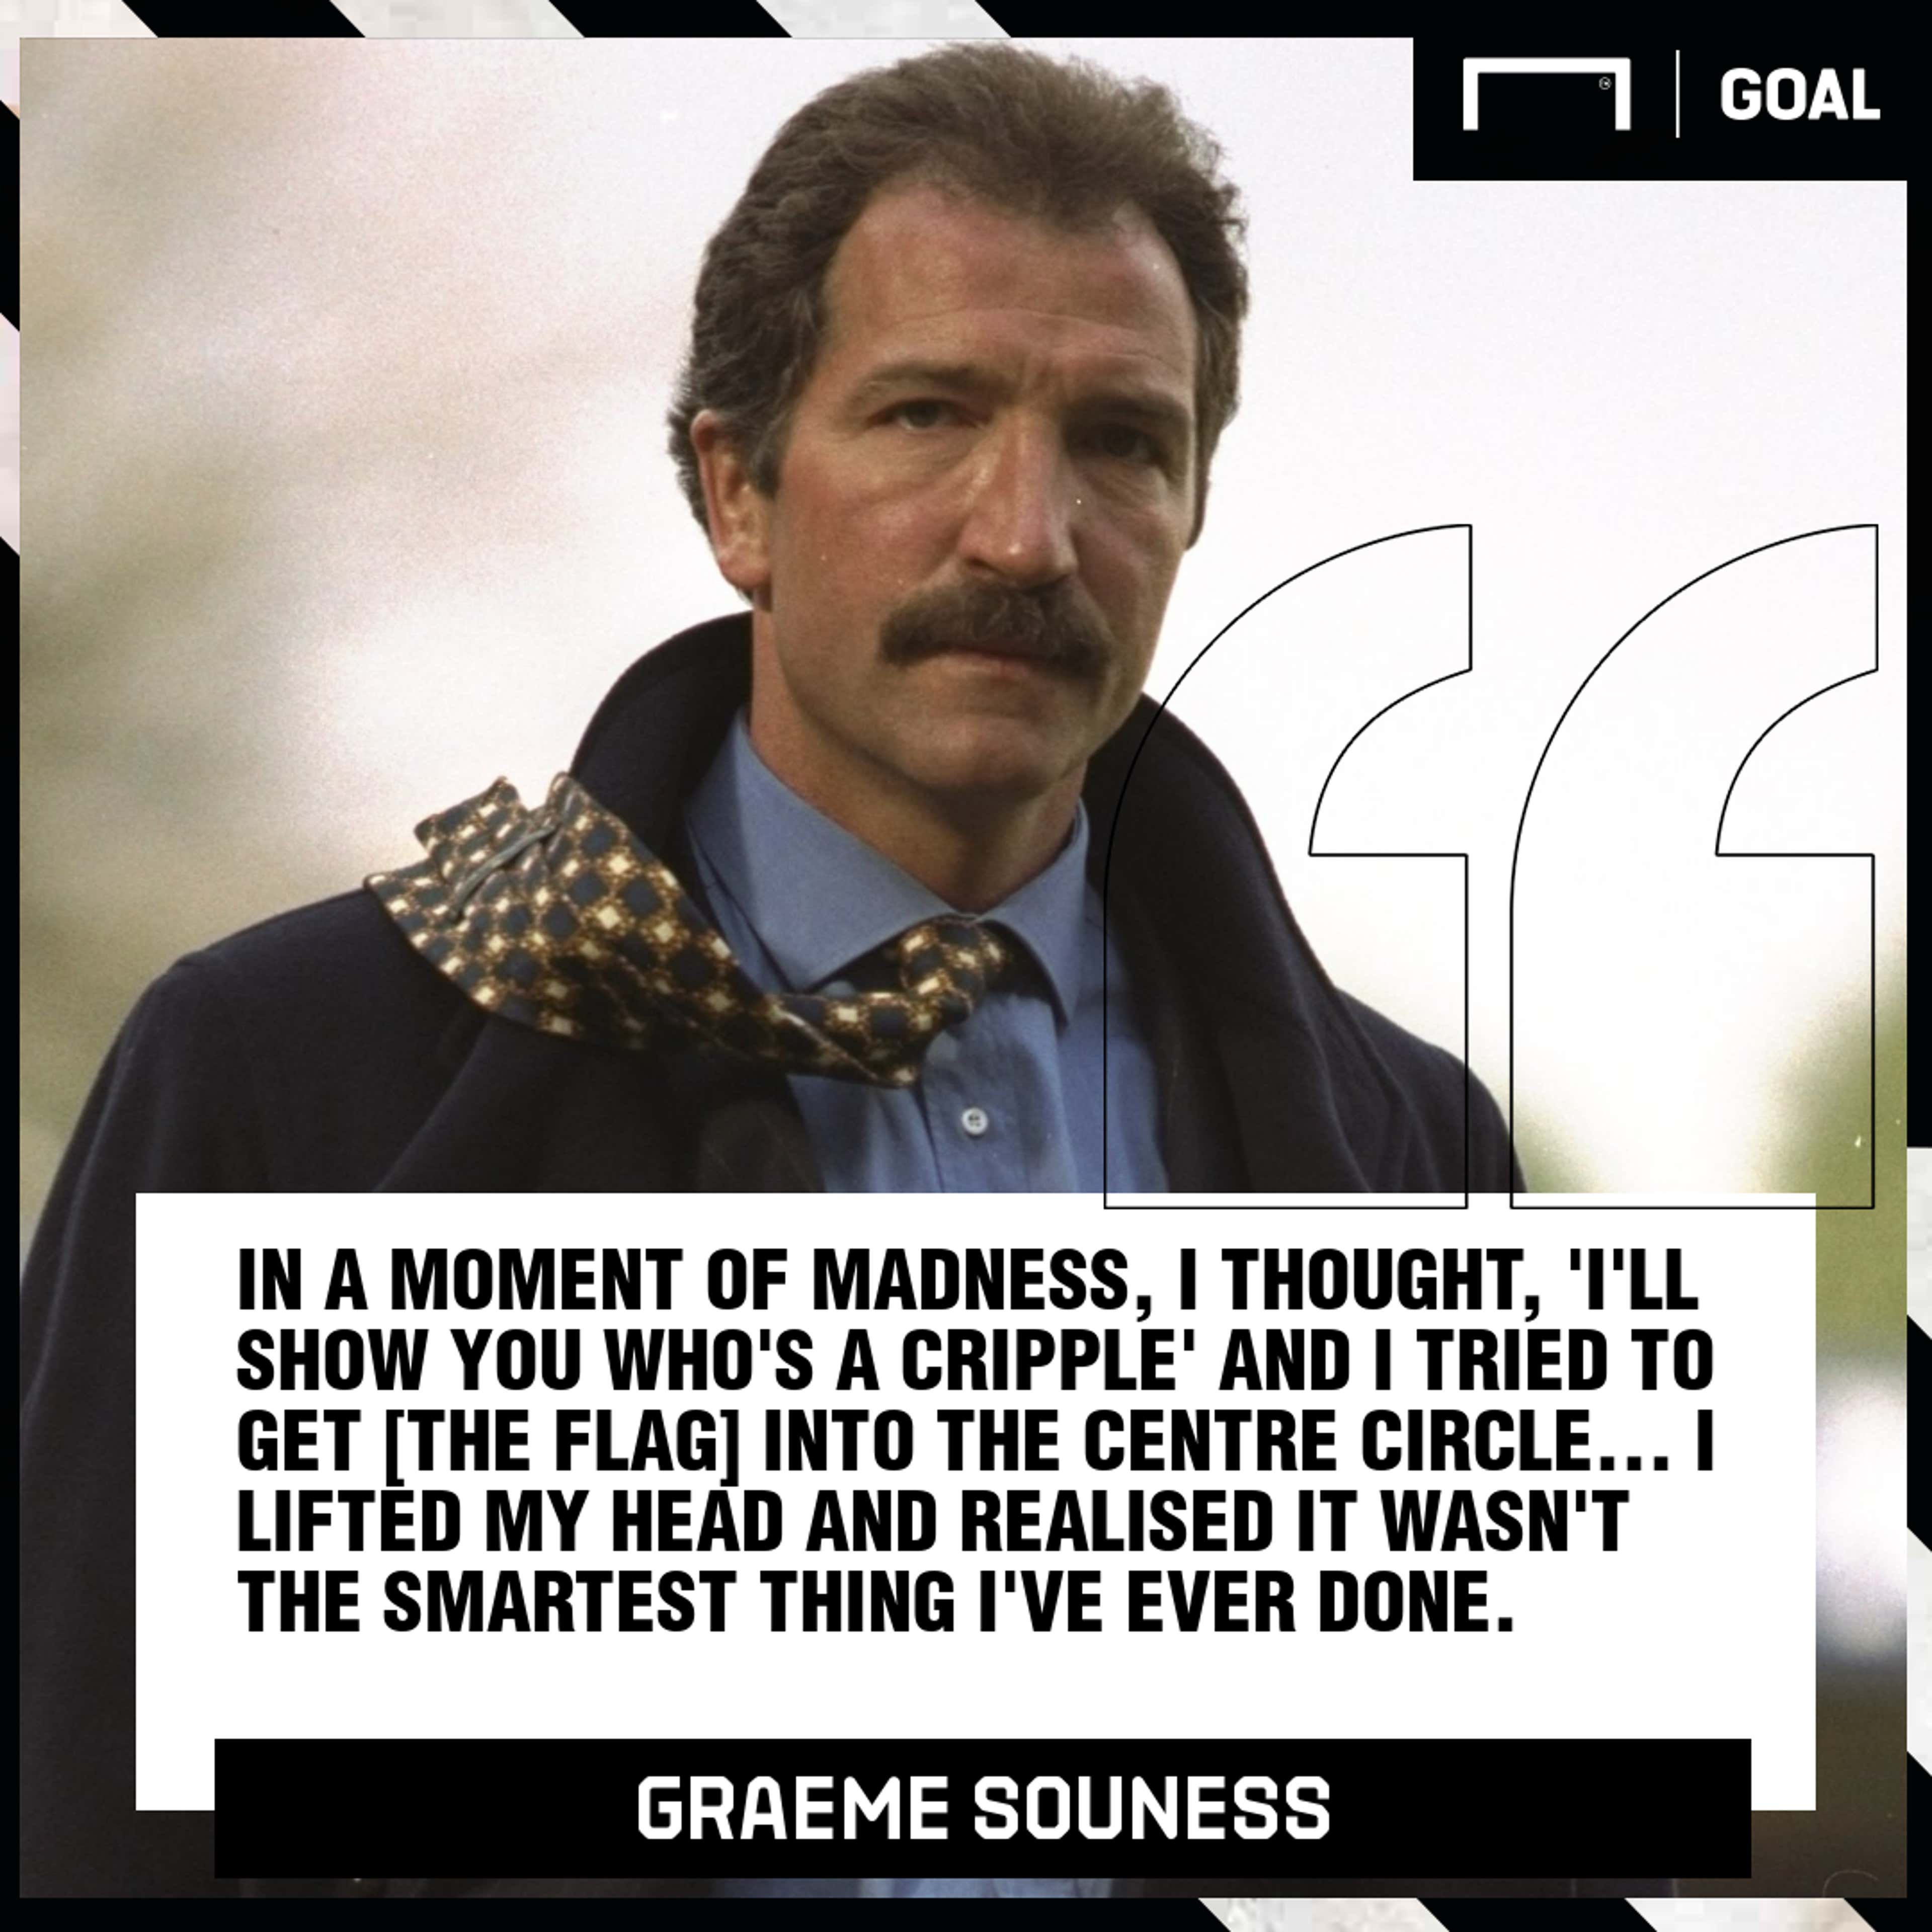 GFX Graeme Souness quote Galatasaray flag